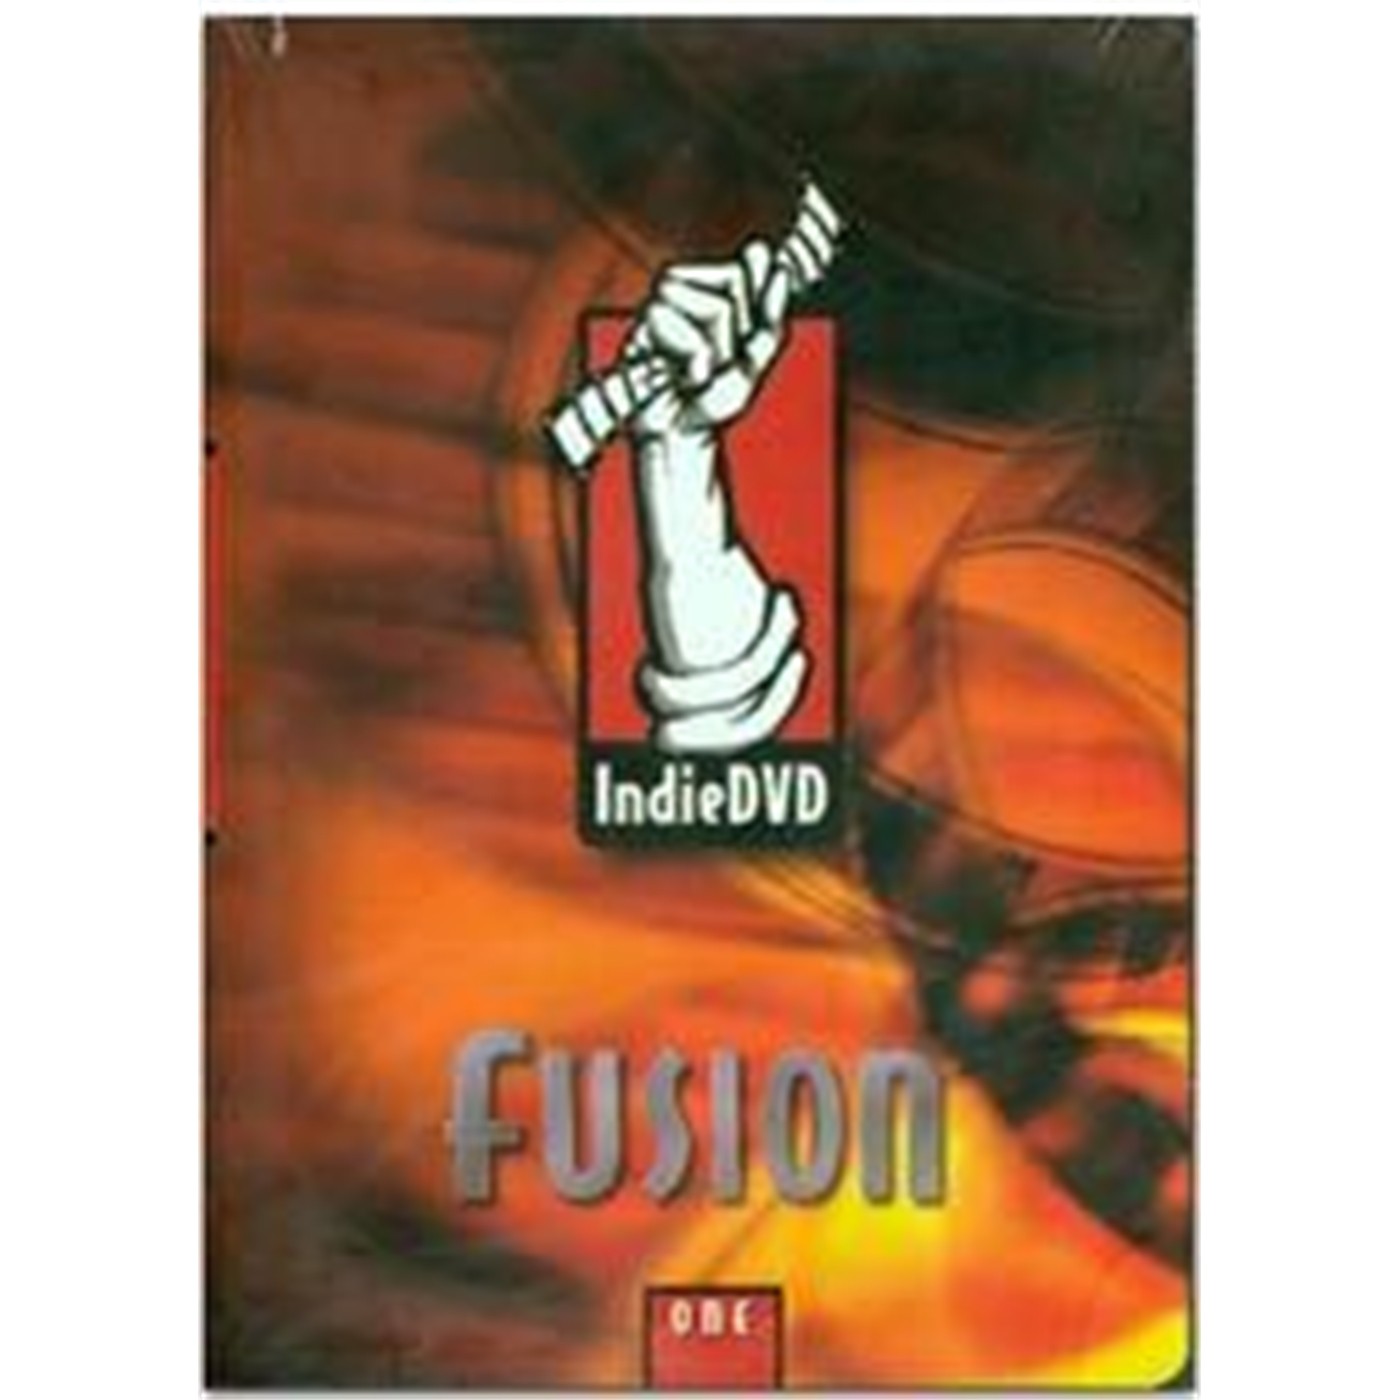 Fusion DVD